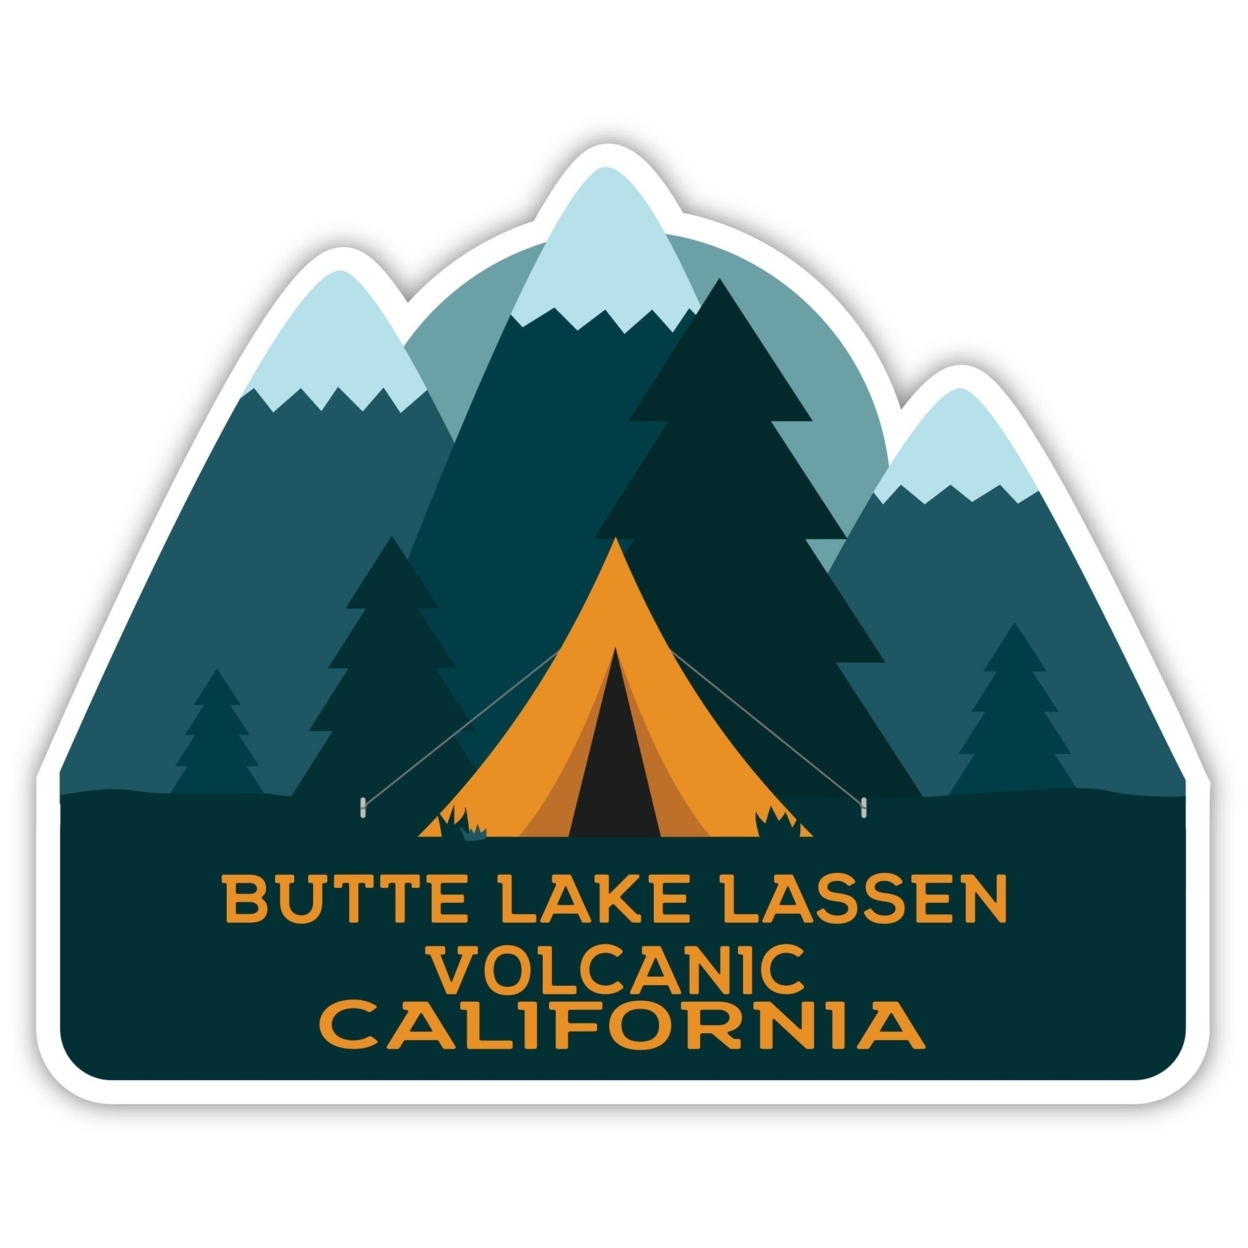 Butte Lake Lassen Volcanic California Souvenir Decorative Stickers (Choose Theme And Size) - Single Unit, 10-Inch, Tent